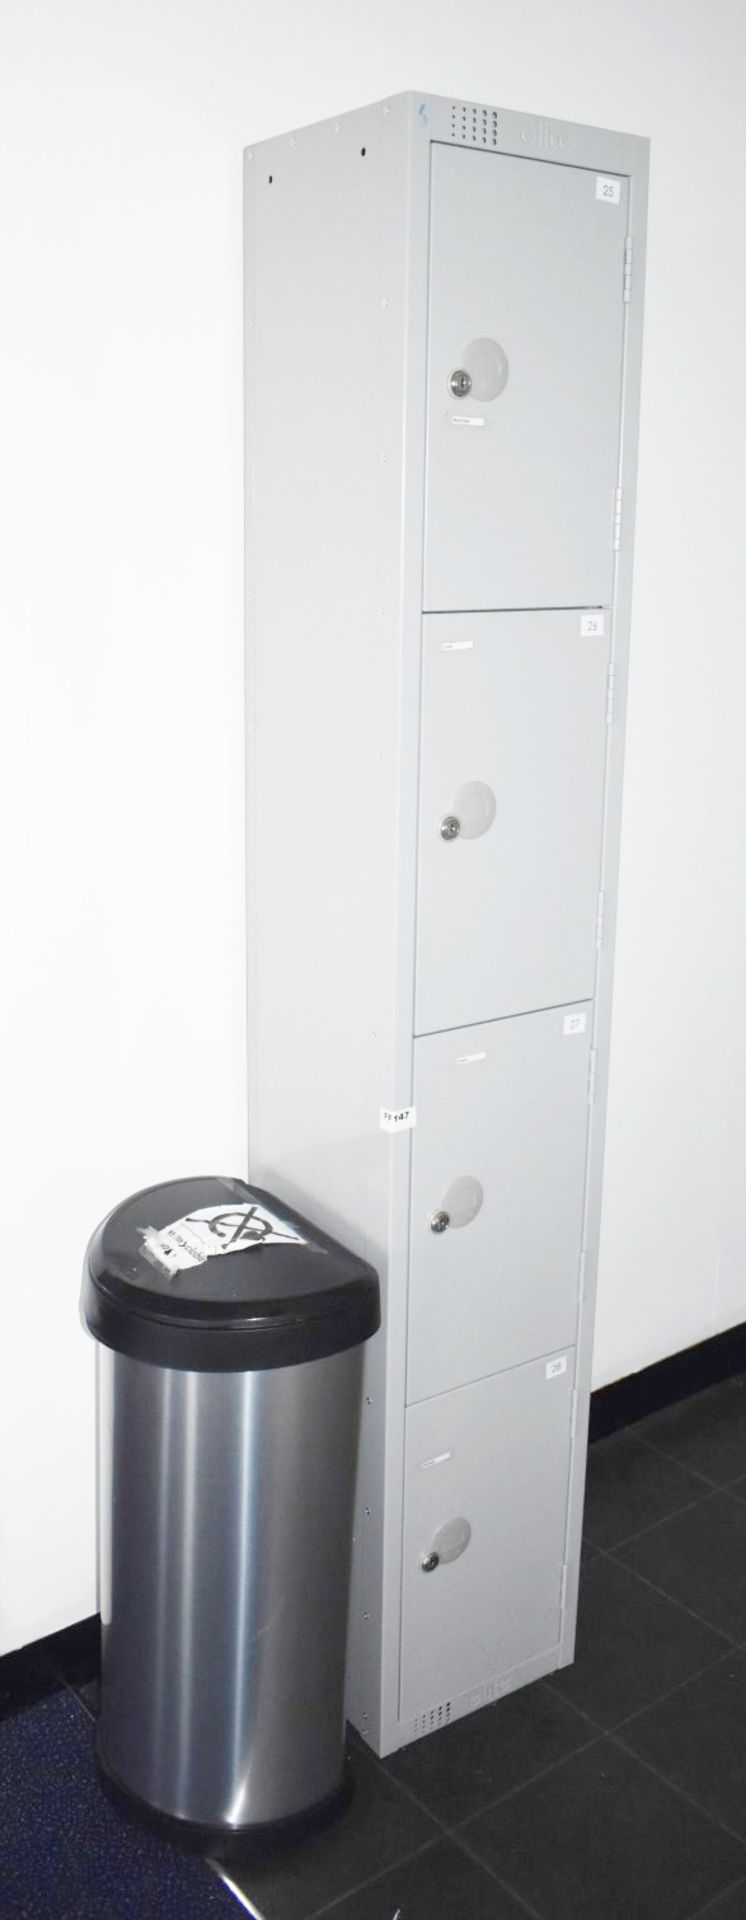 1 x Elite Four Door Staff Locker Without Keys - Includes Waste Bin - Ref: FF147 U - CL544 - - Image 3 of 3